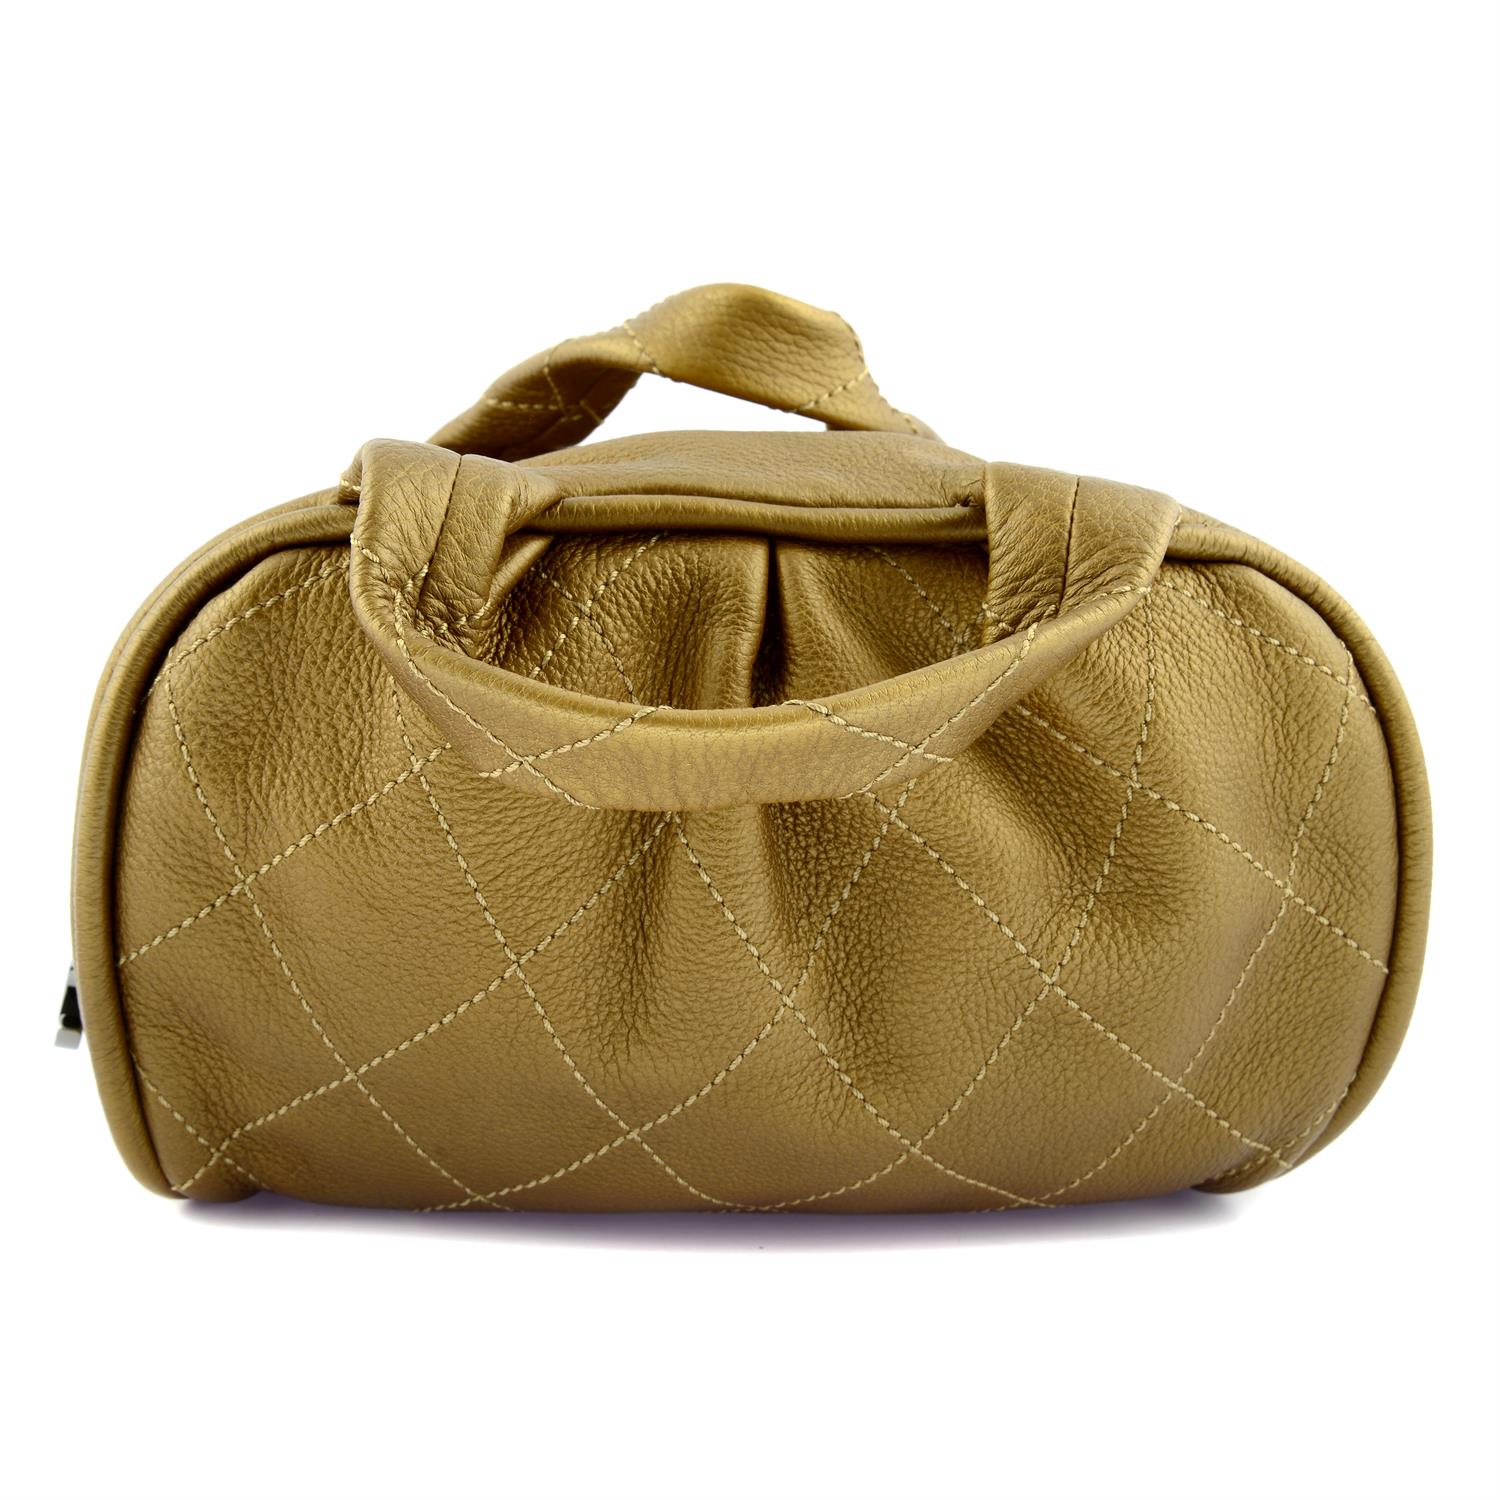 CHANEL - a gold-tone leather handbag. - Image 2 of 5